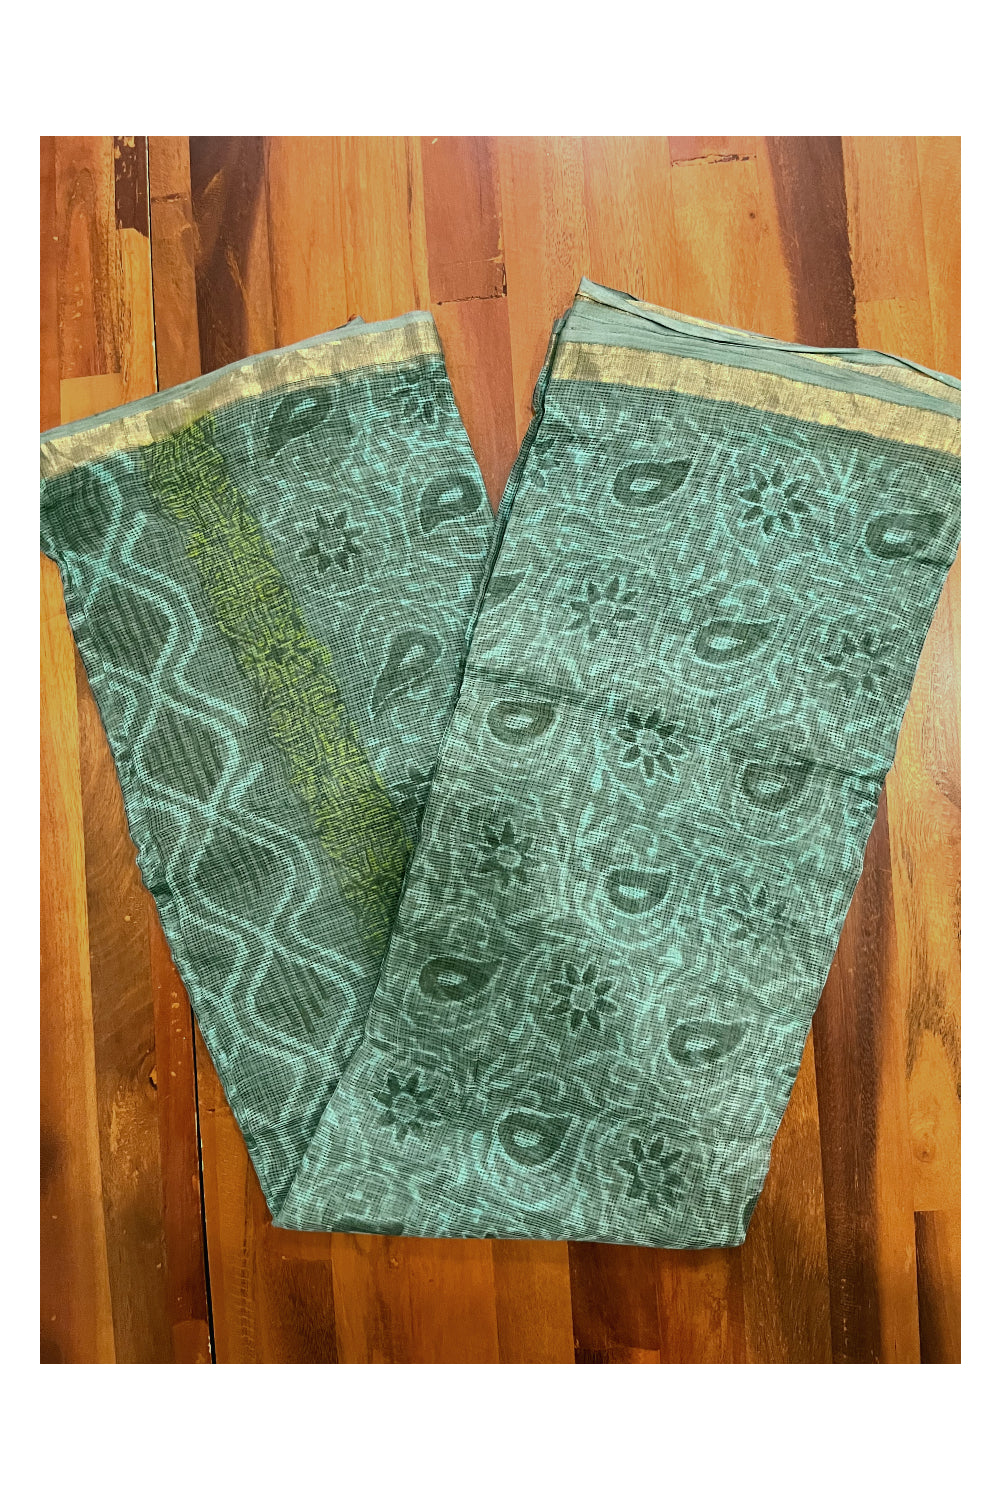 Southloom Kota Fabric Floral Printed Green Saree